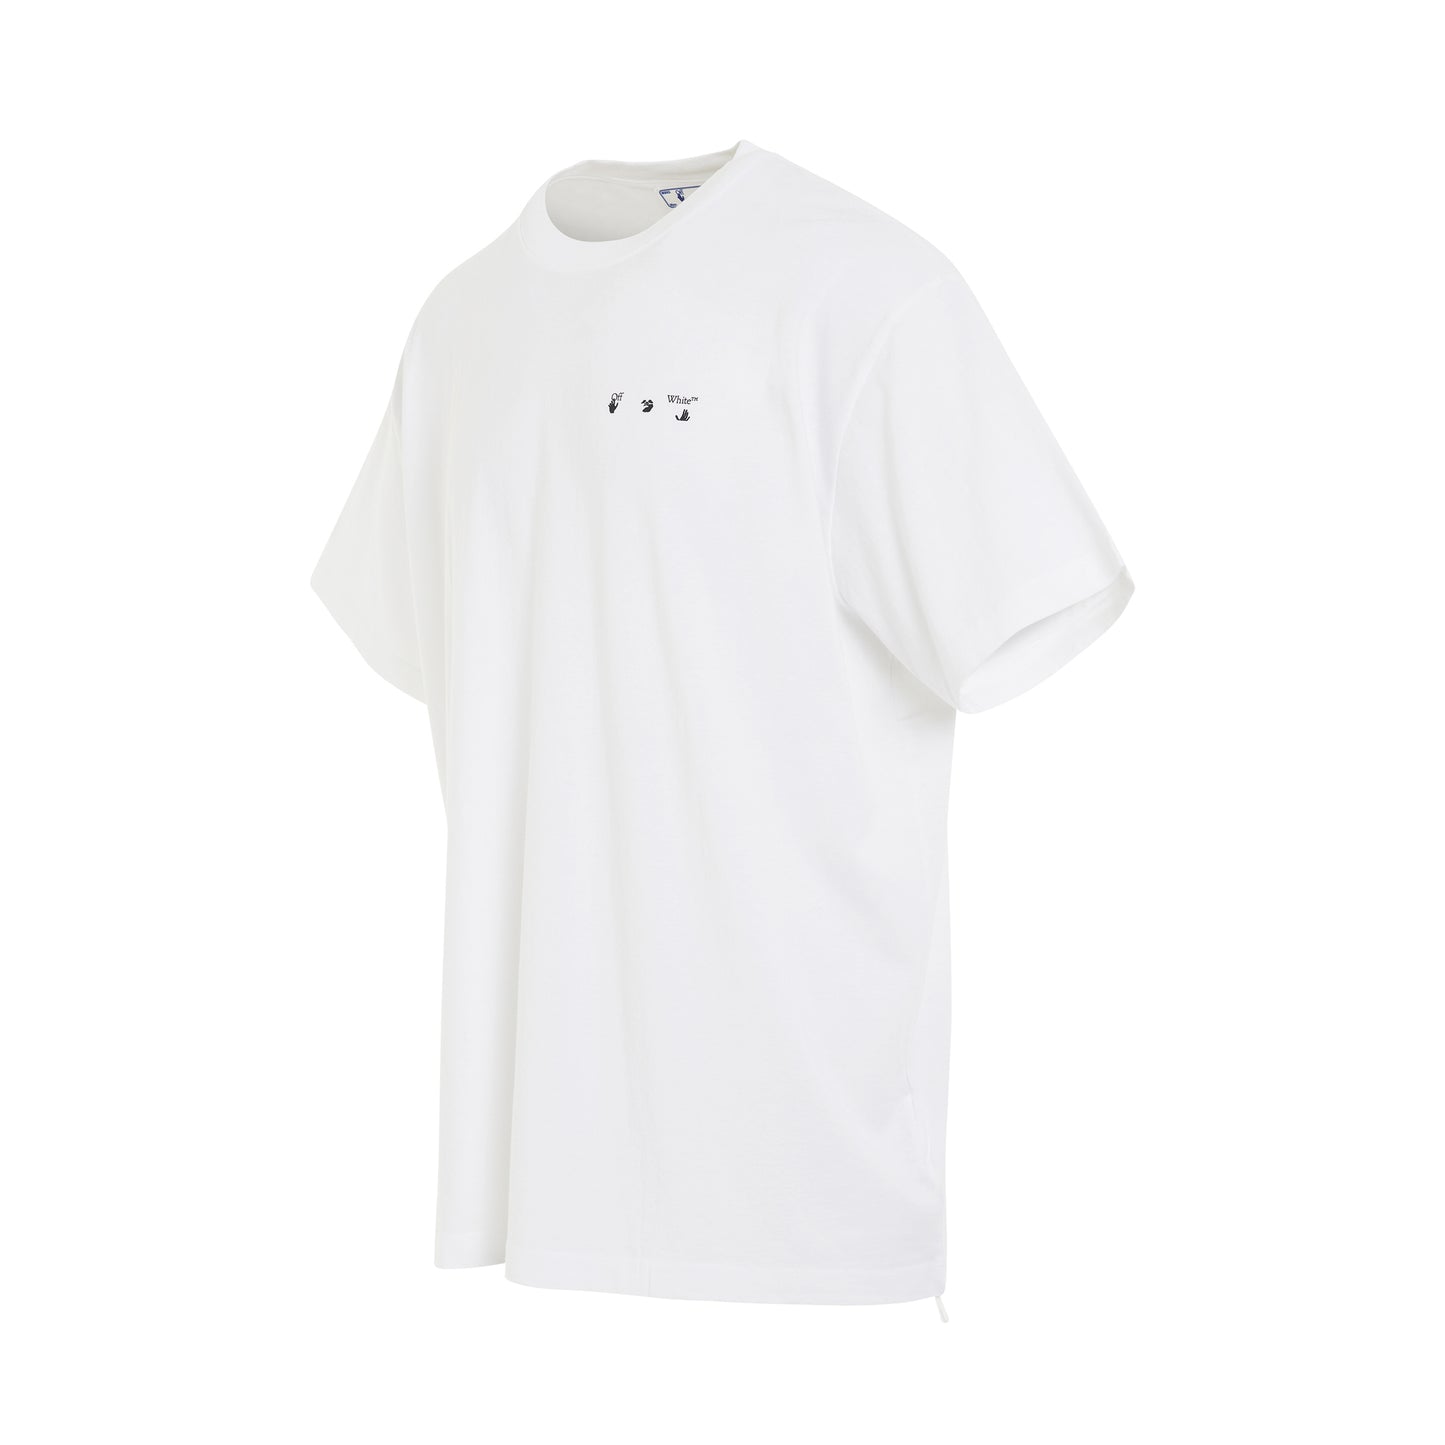 Diagonal Paint Oversized T-Shirt in White/Black